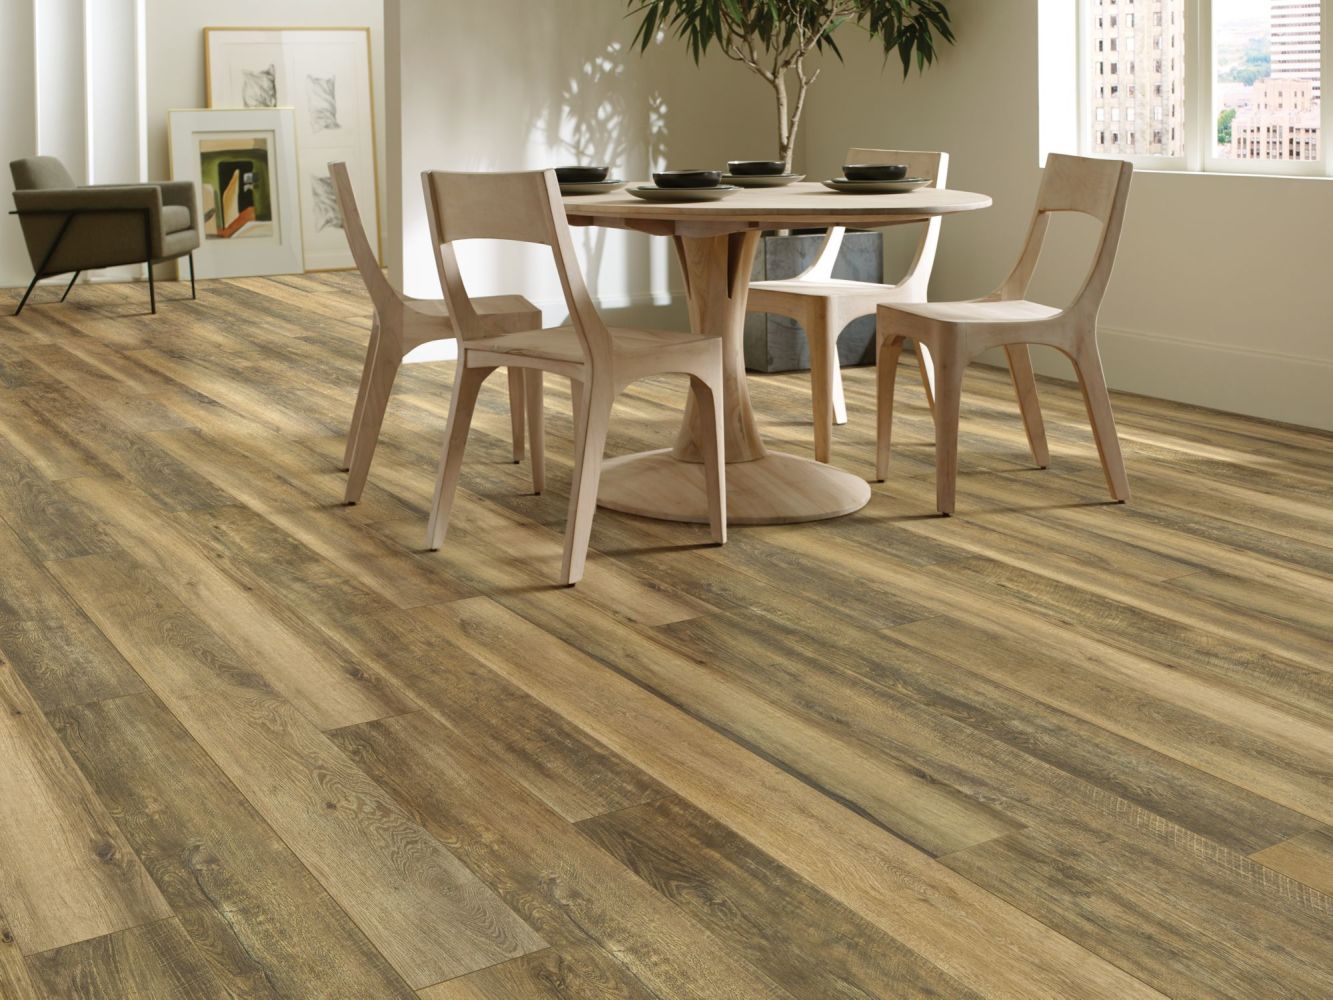 Shaw Floors Resilient Residential Paragon XL HD Plus Brown Sugar Oak 07054_2033V